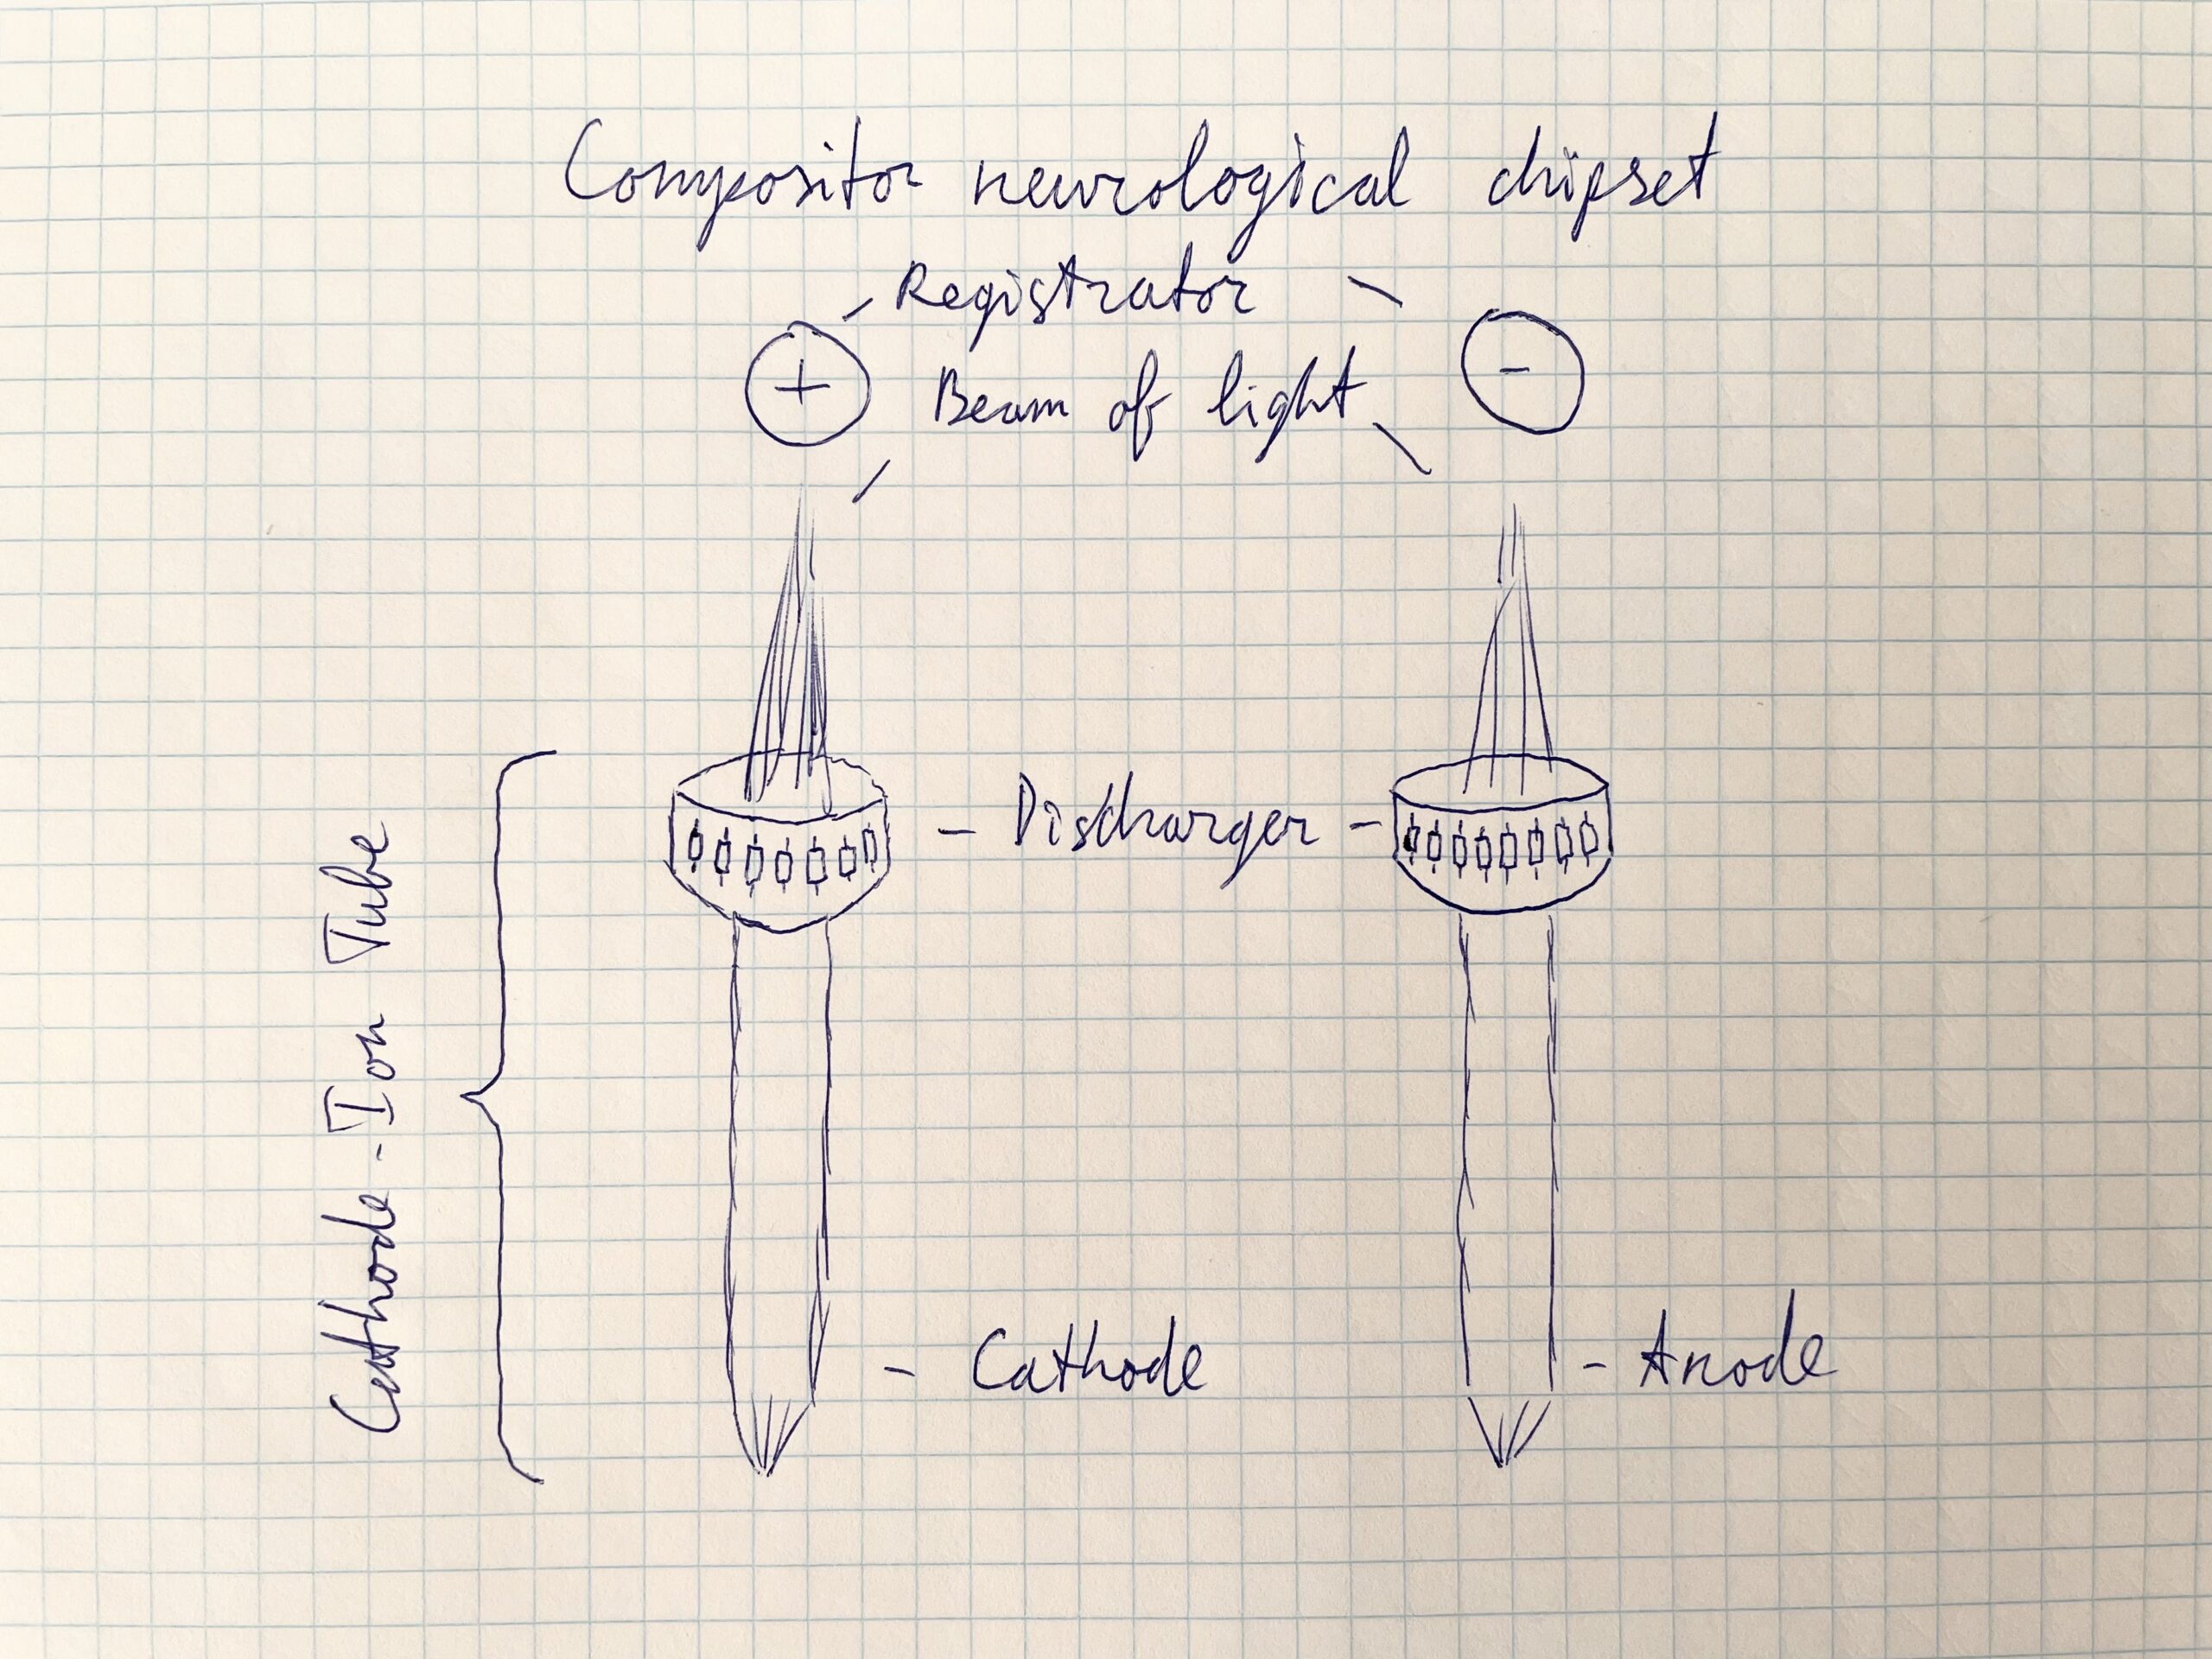 Compositor neurological chipset sketch